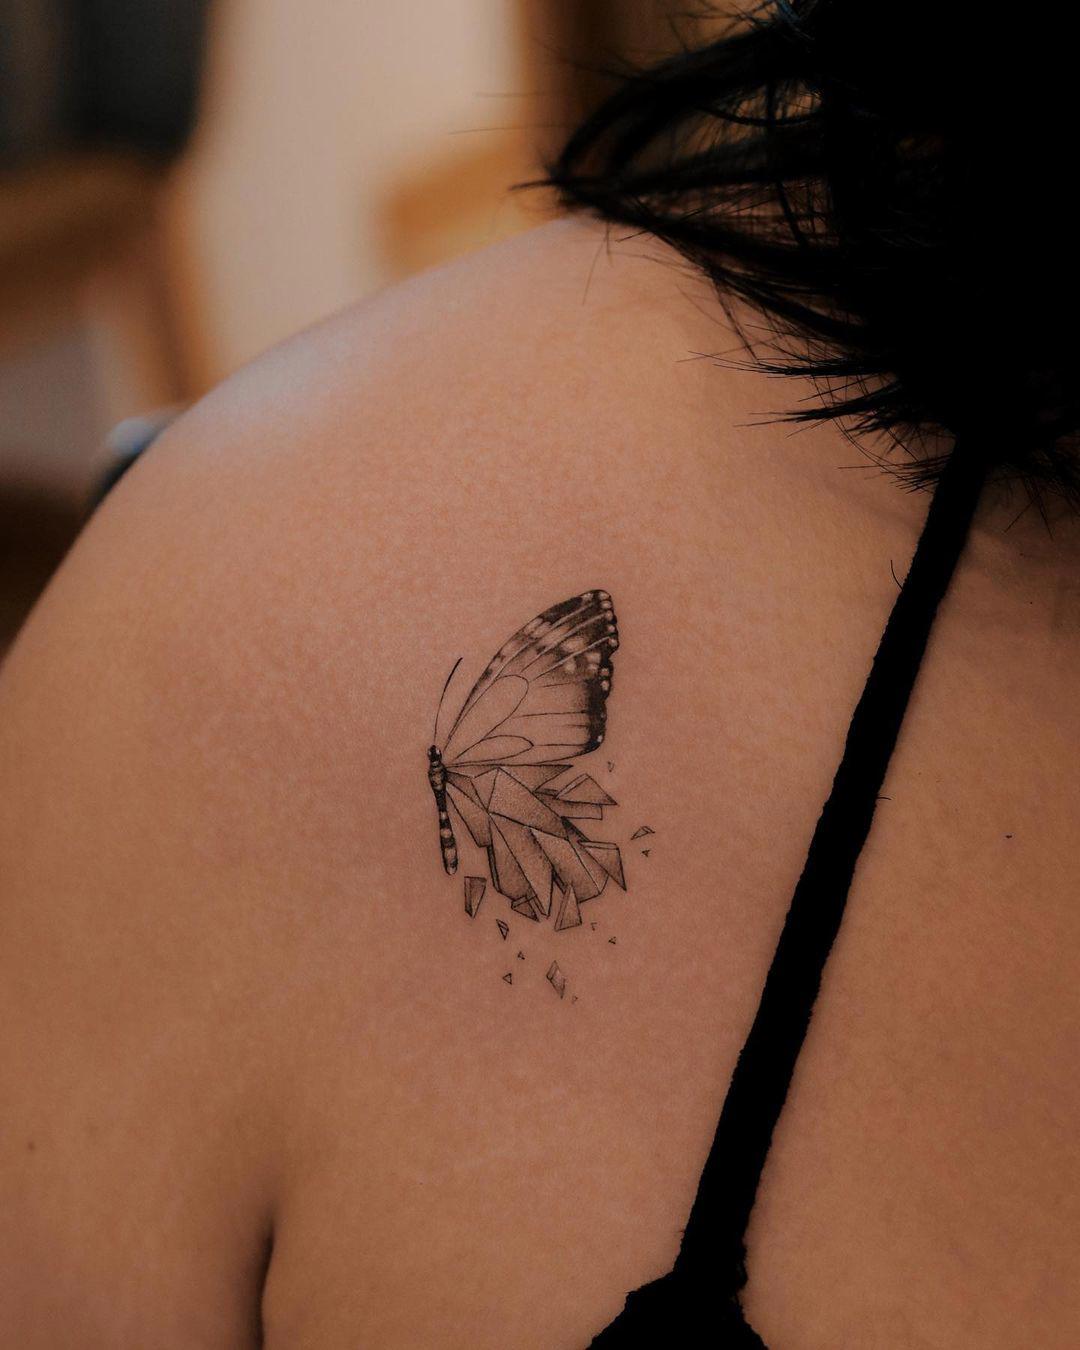 Un tattoo de mariposa que representa la fragilidad